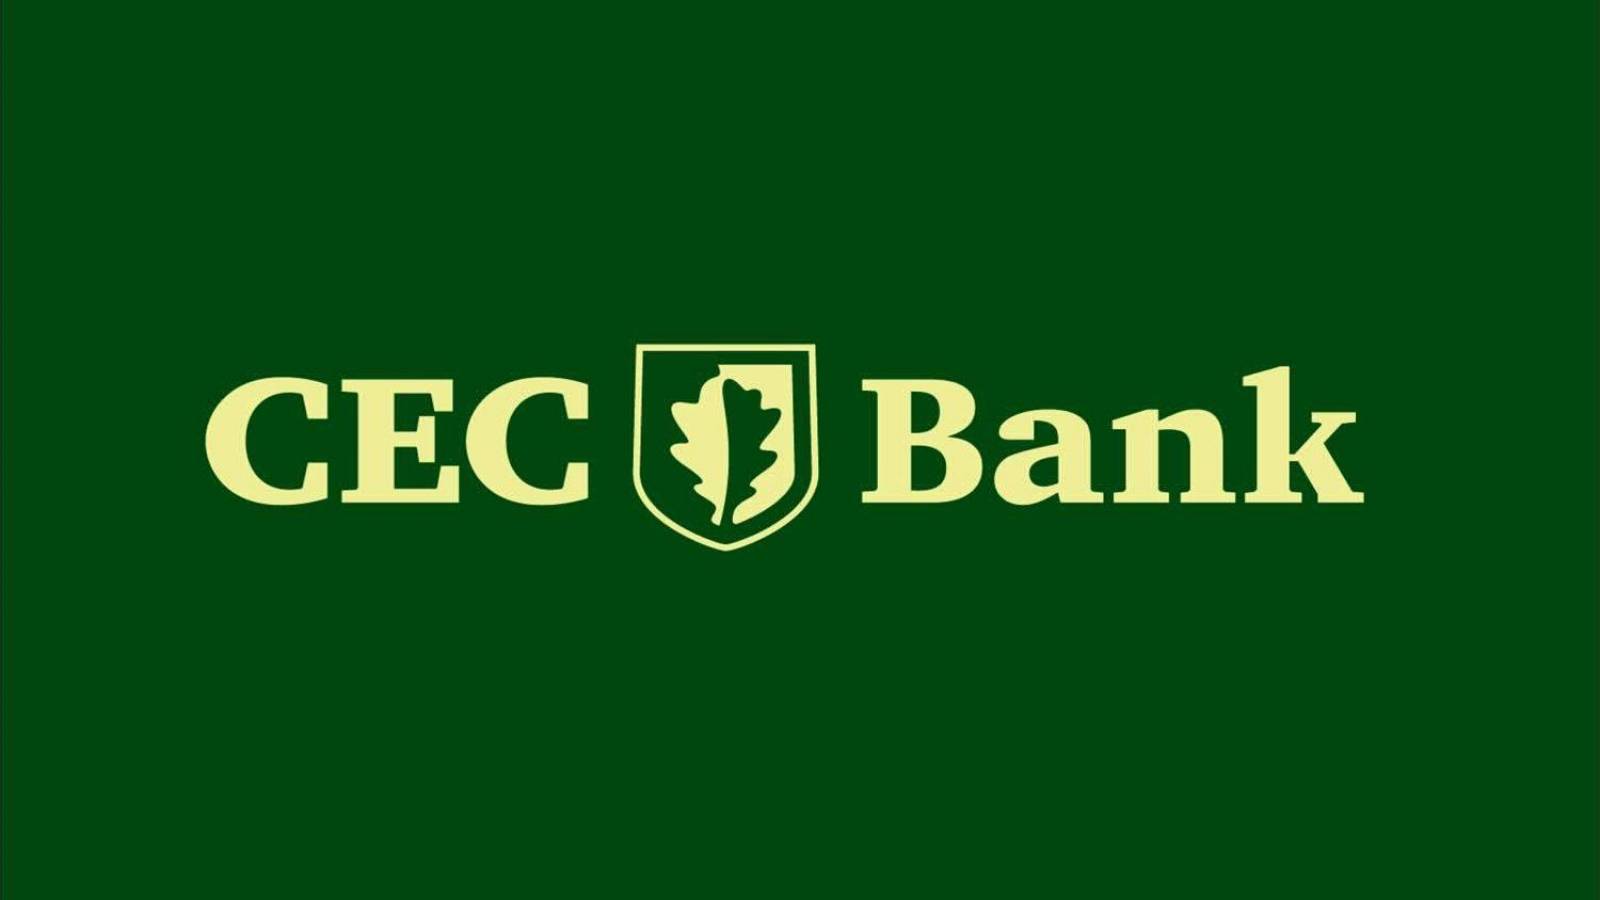 CEC Pankin turvallisuus